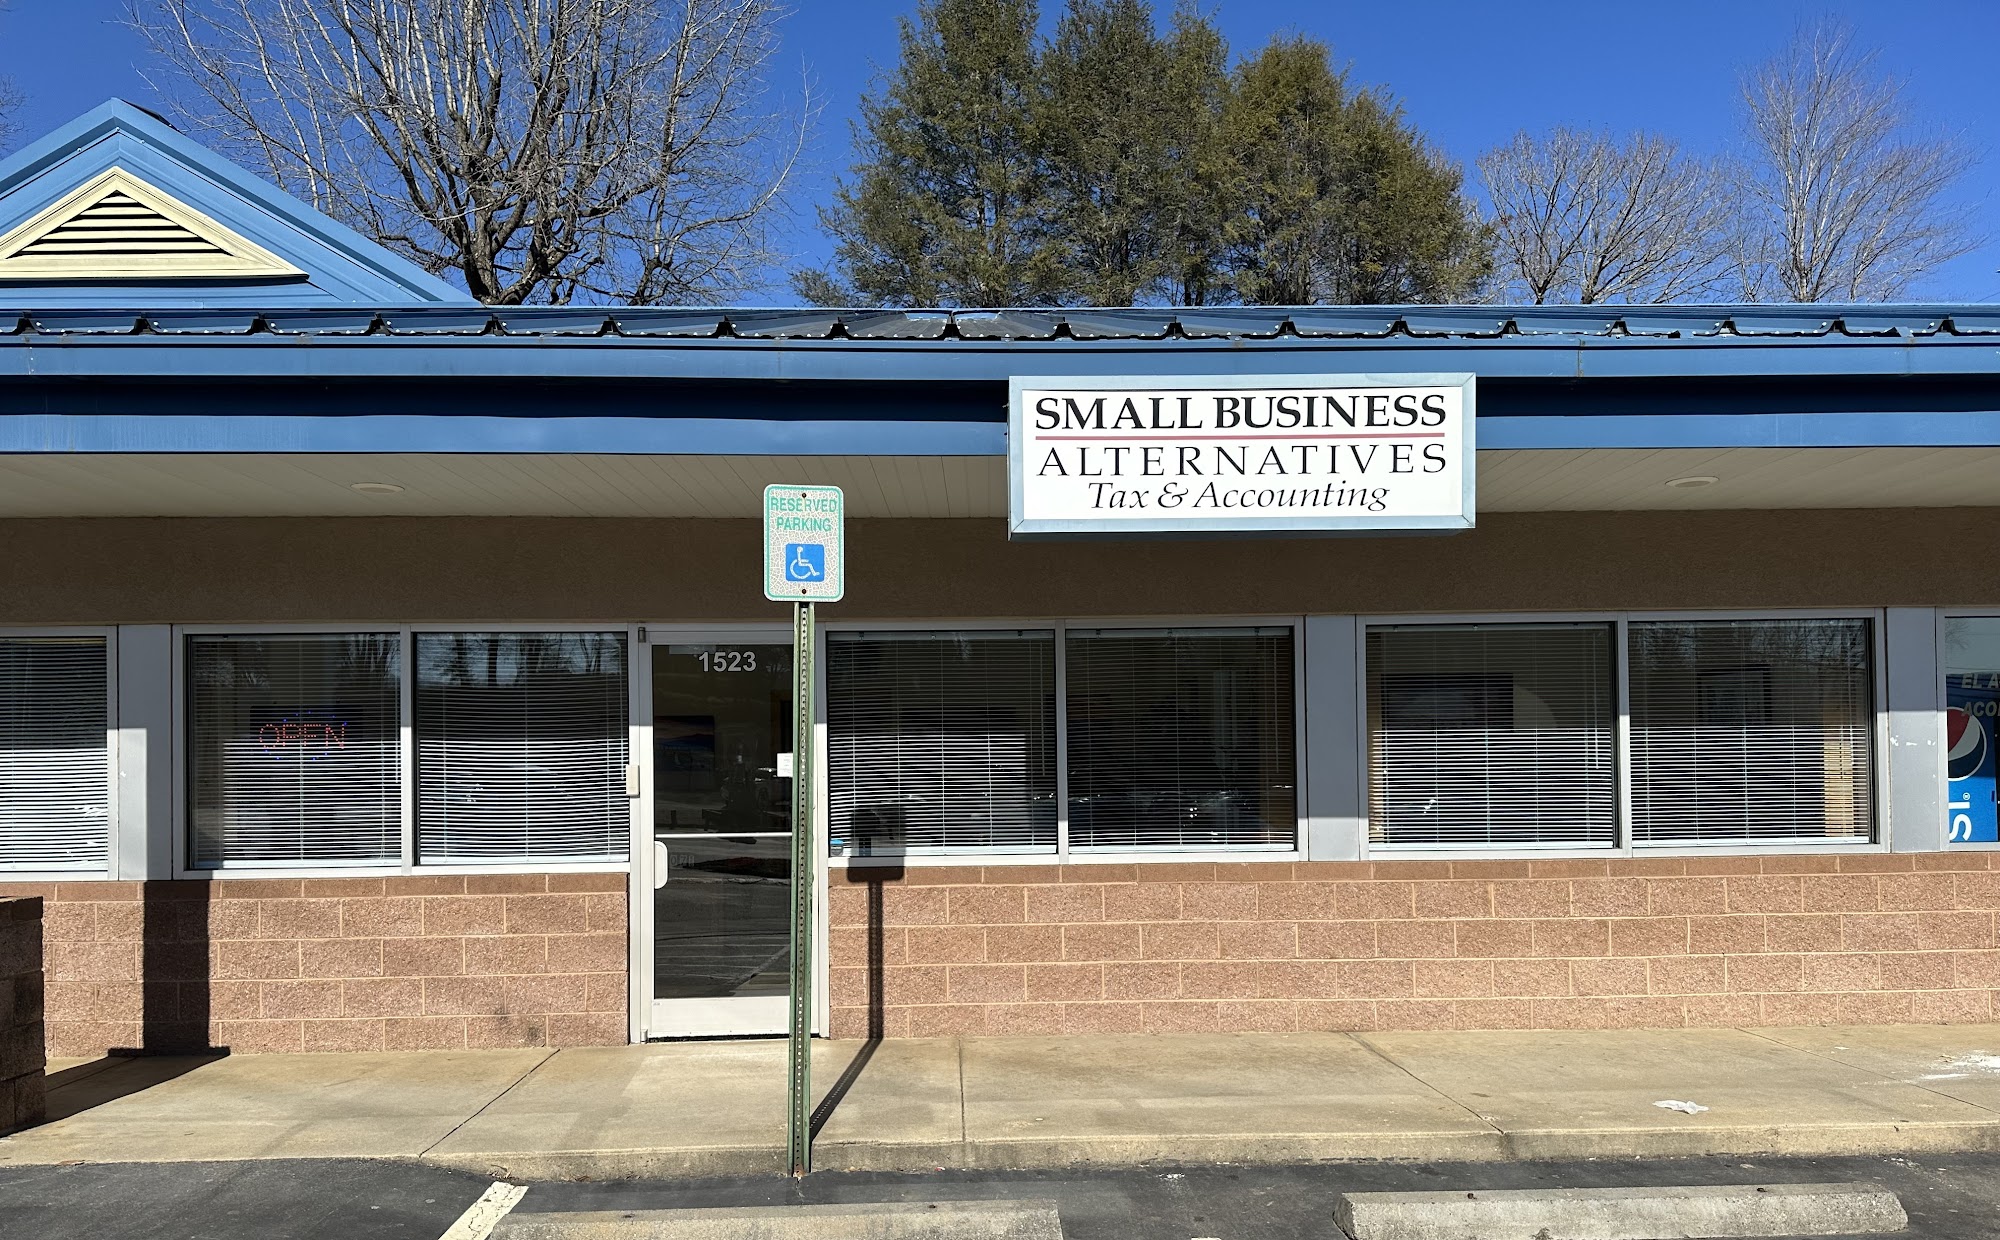 Small Business Alternatives